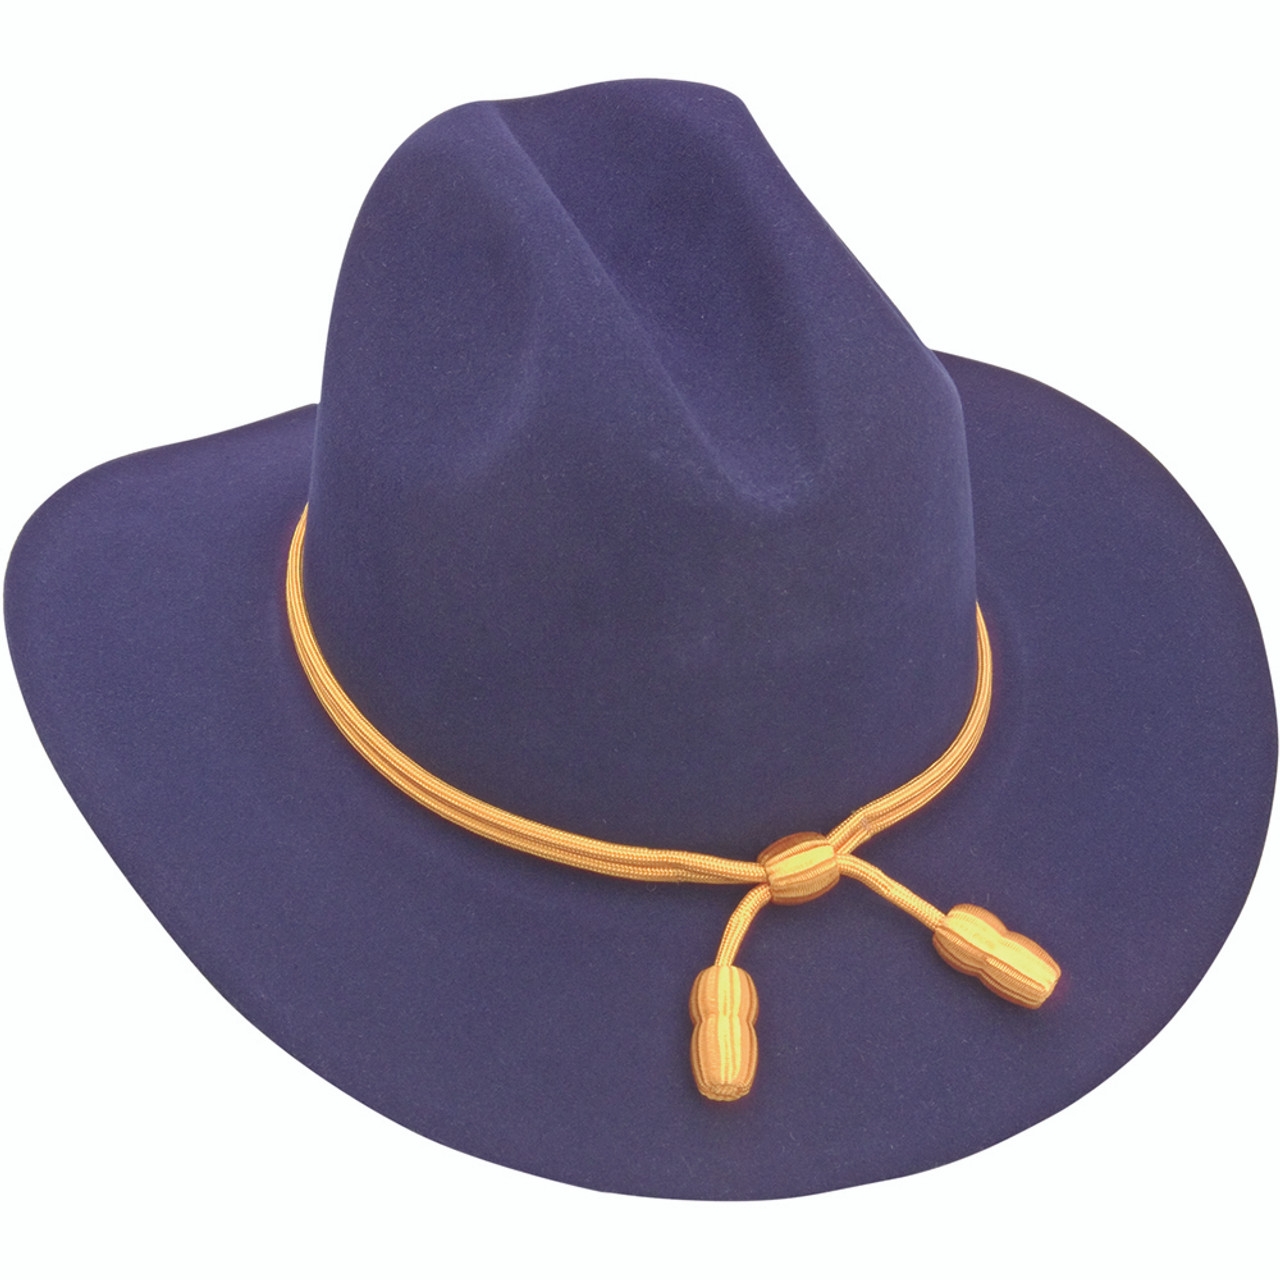 Civil War Union Officer's Slouch Hat - XL